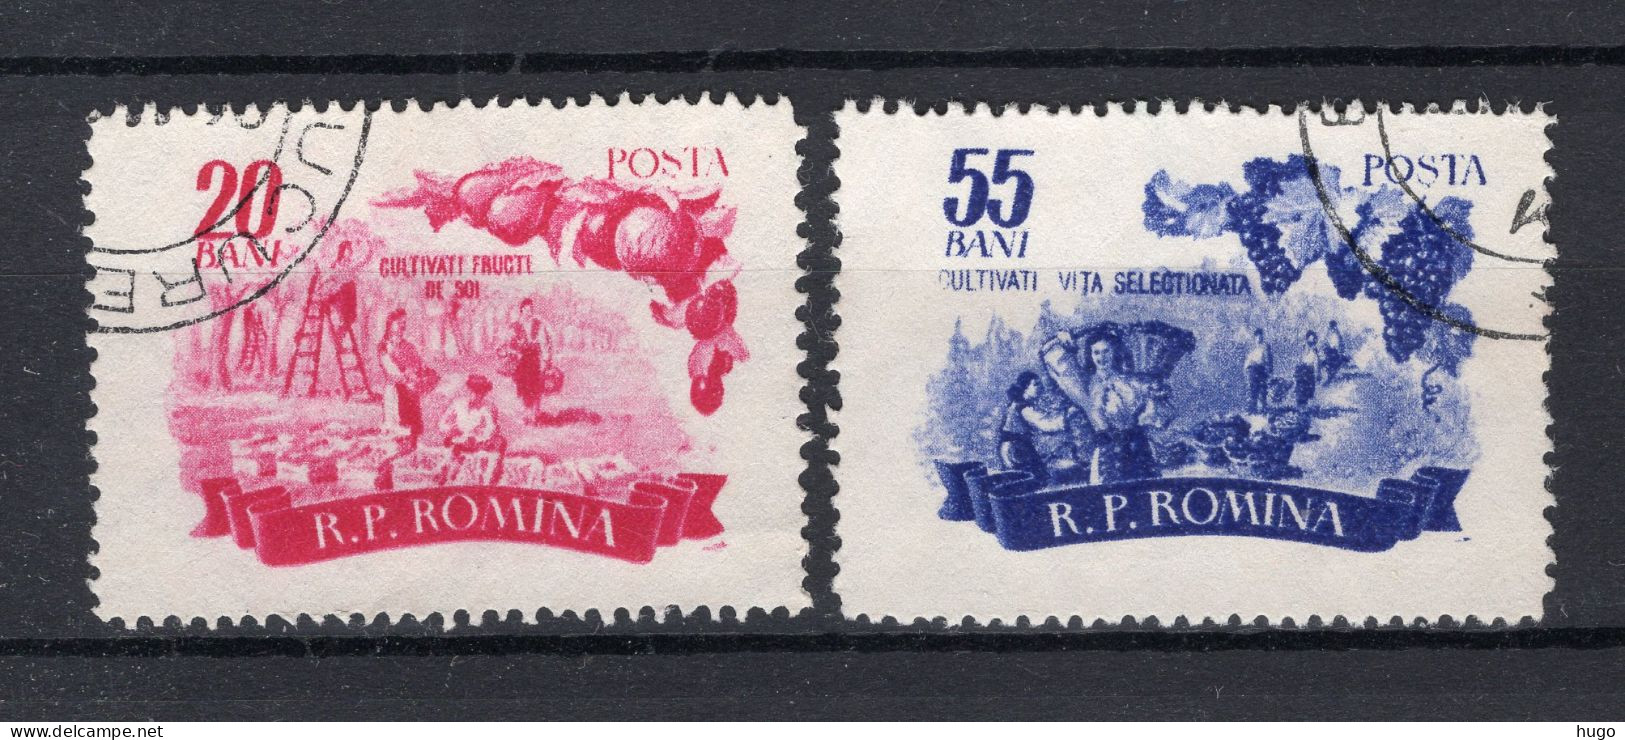 ROEMENIE Yt. 1415/1416° Gestempeld 1955 - Used Stamps